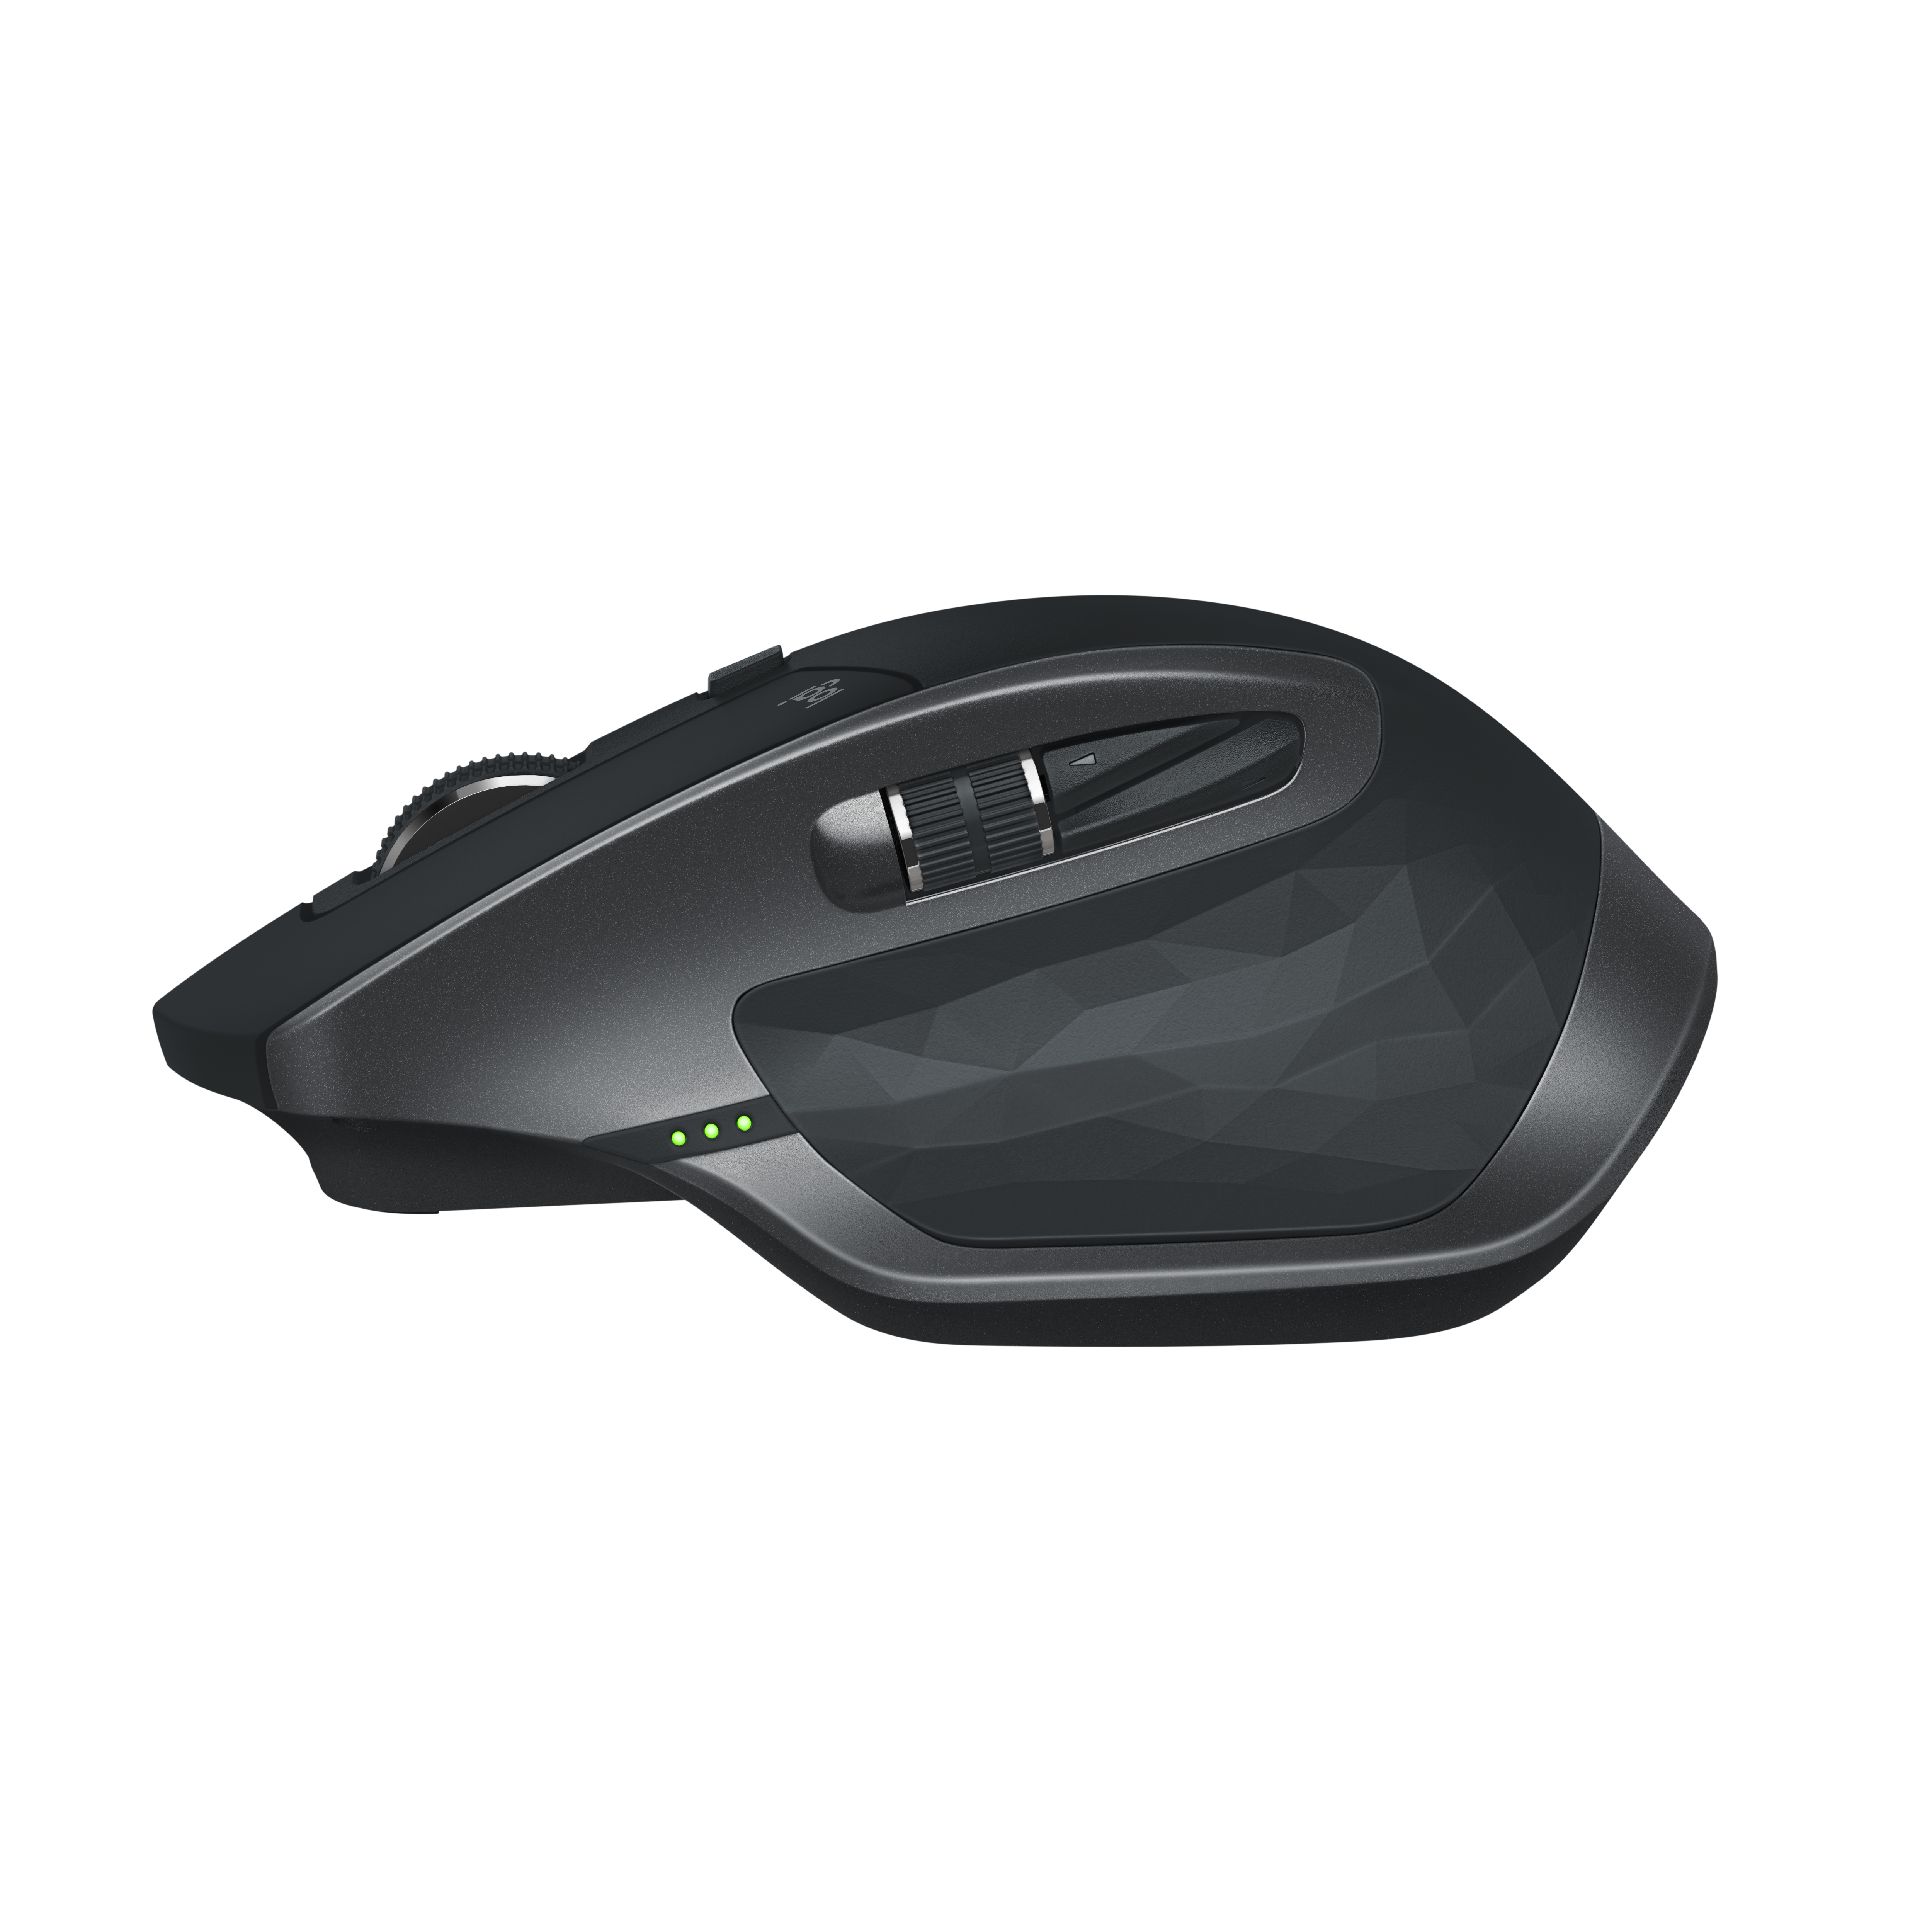 MX Master 2S Wireless Mouse, Graphite